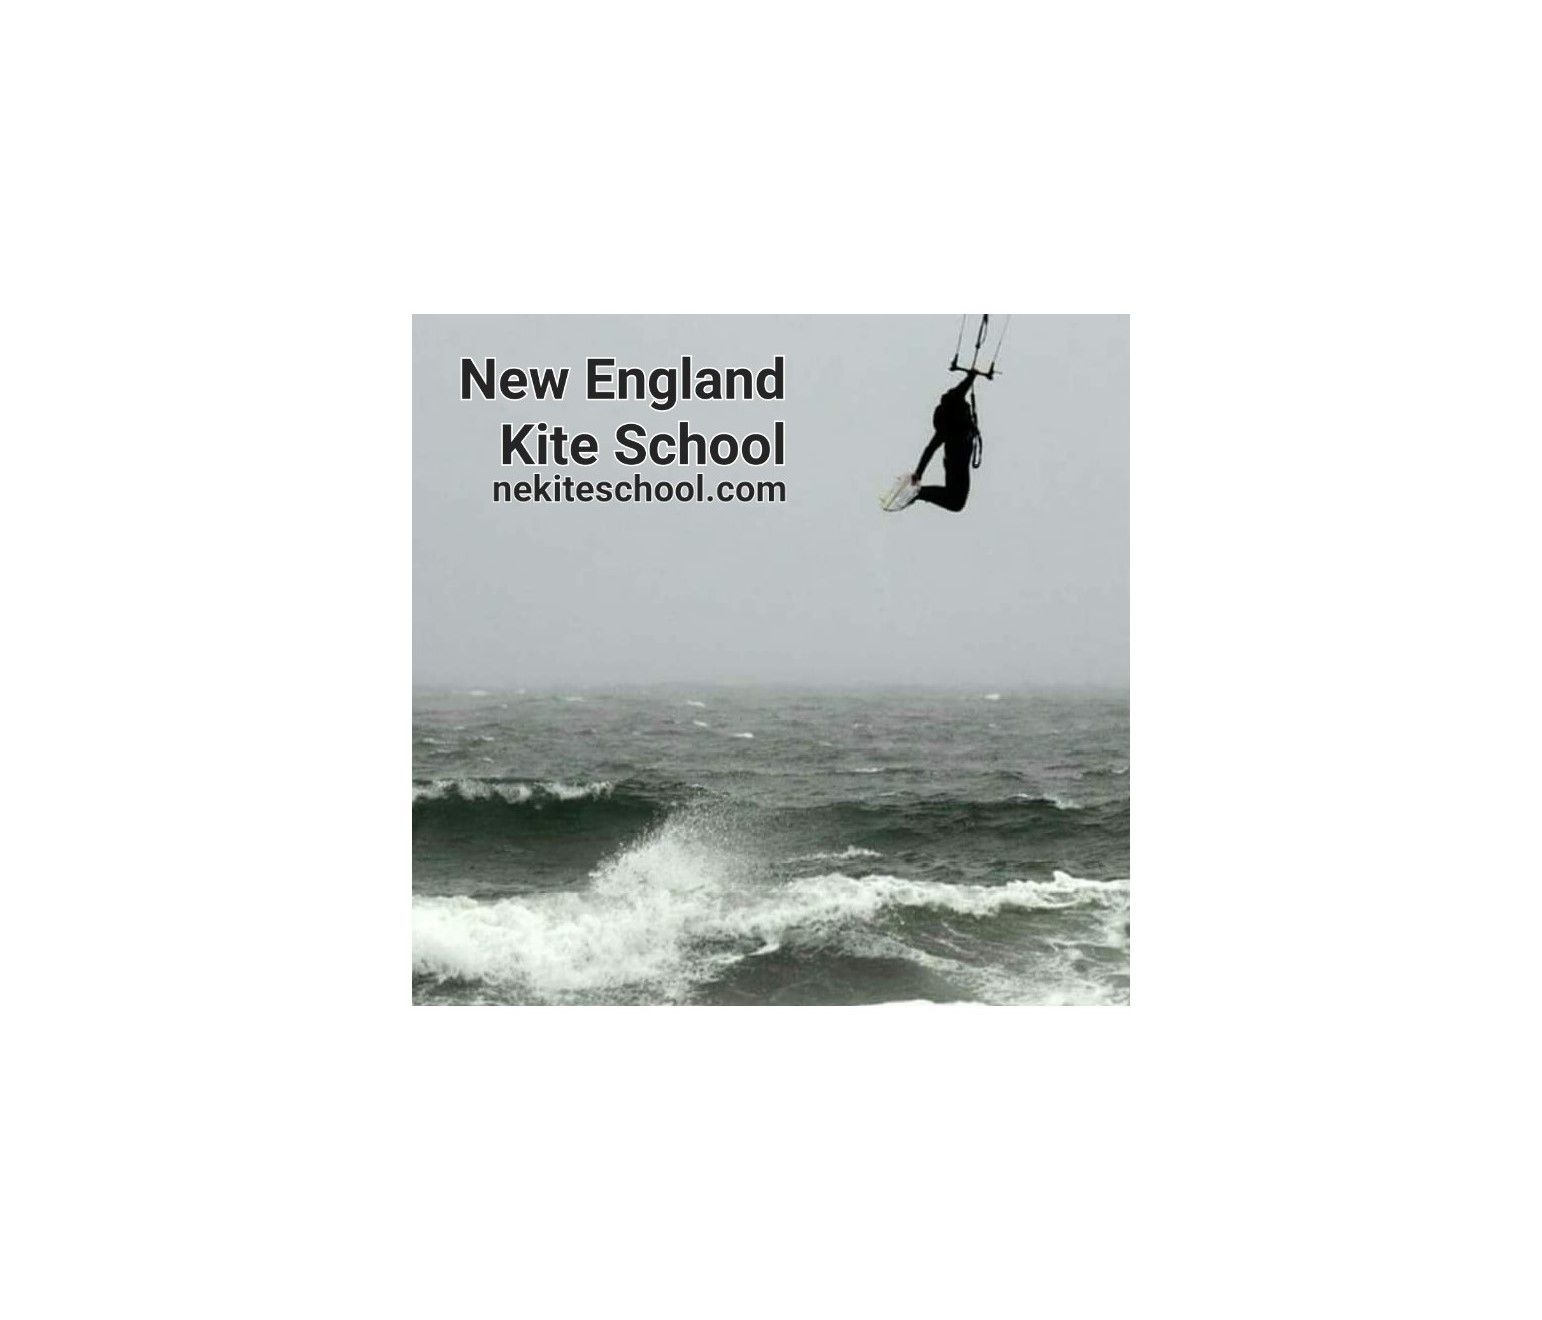 Need Kitesurfing Lessons? - New England Kite School